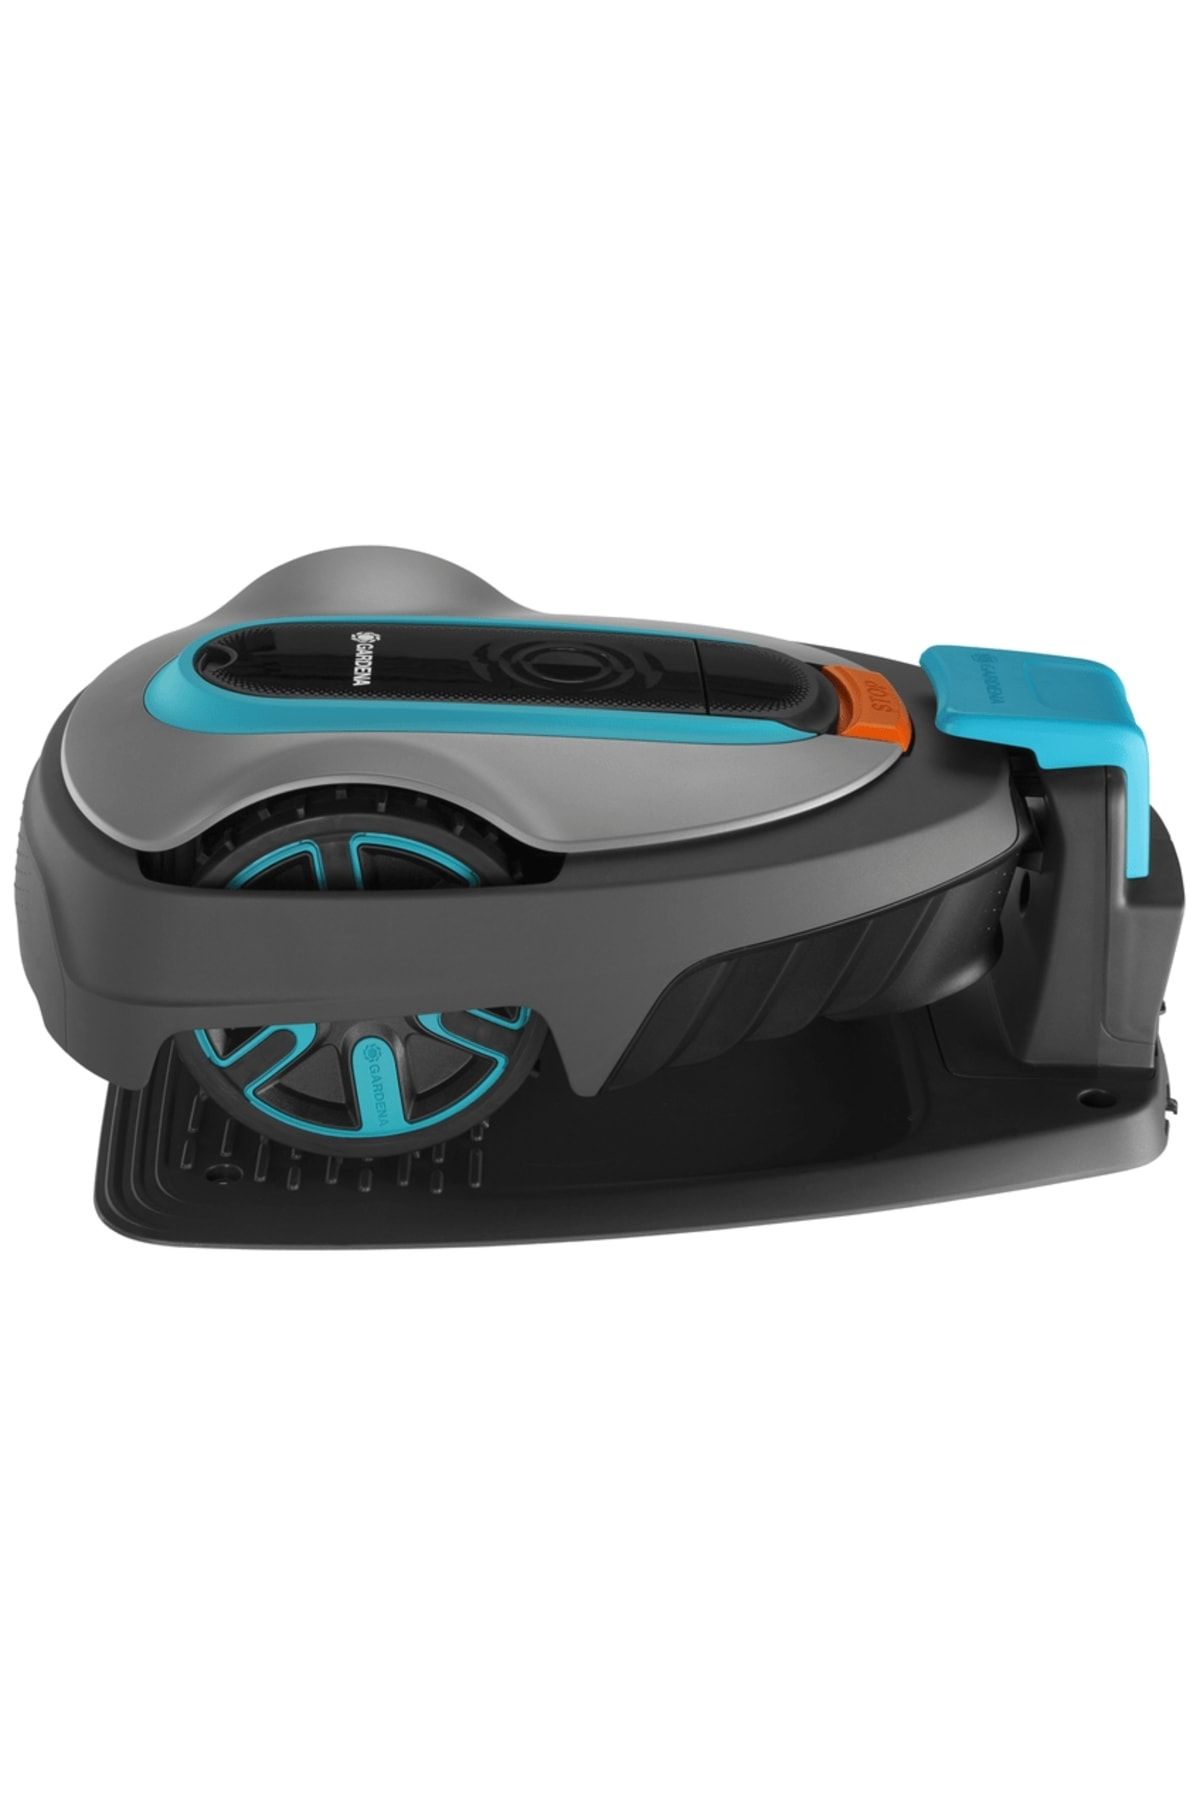 Gardena Robotik Bluetooth Özellikli Akülü Çim Biçme Makinesi 500m²